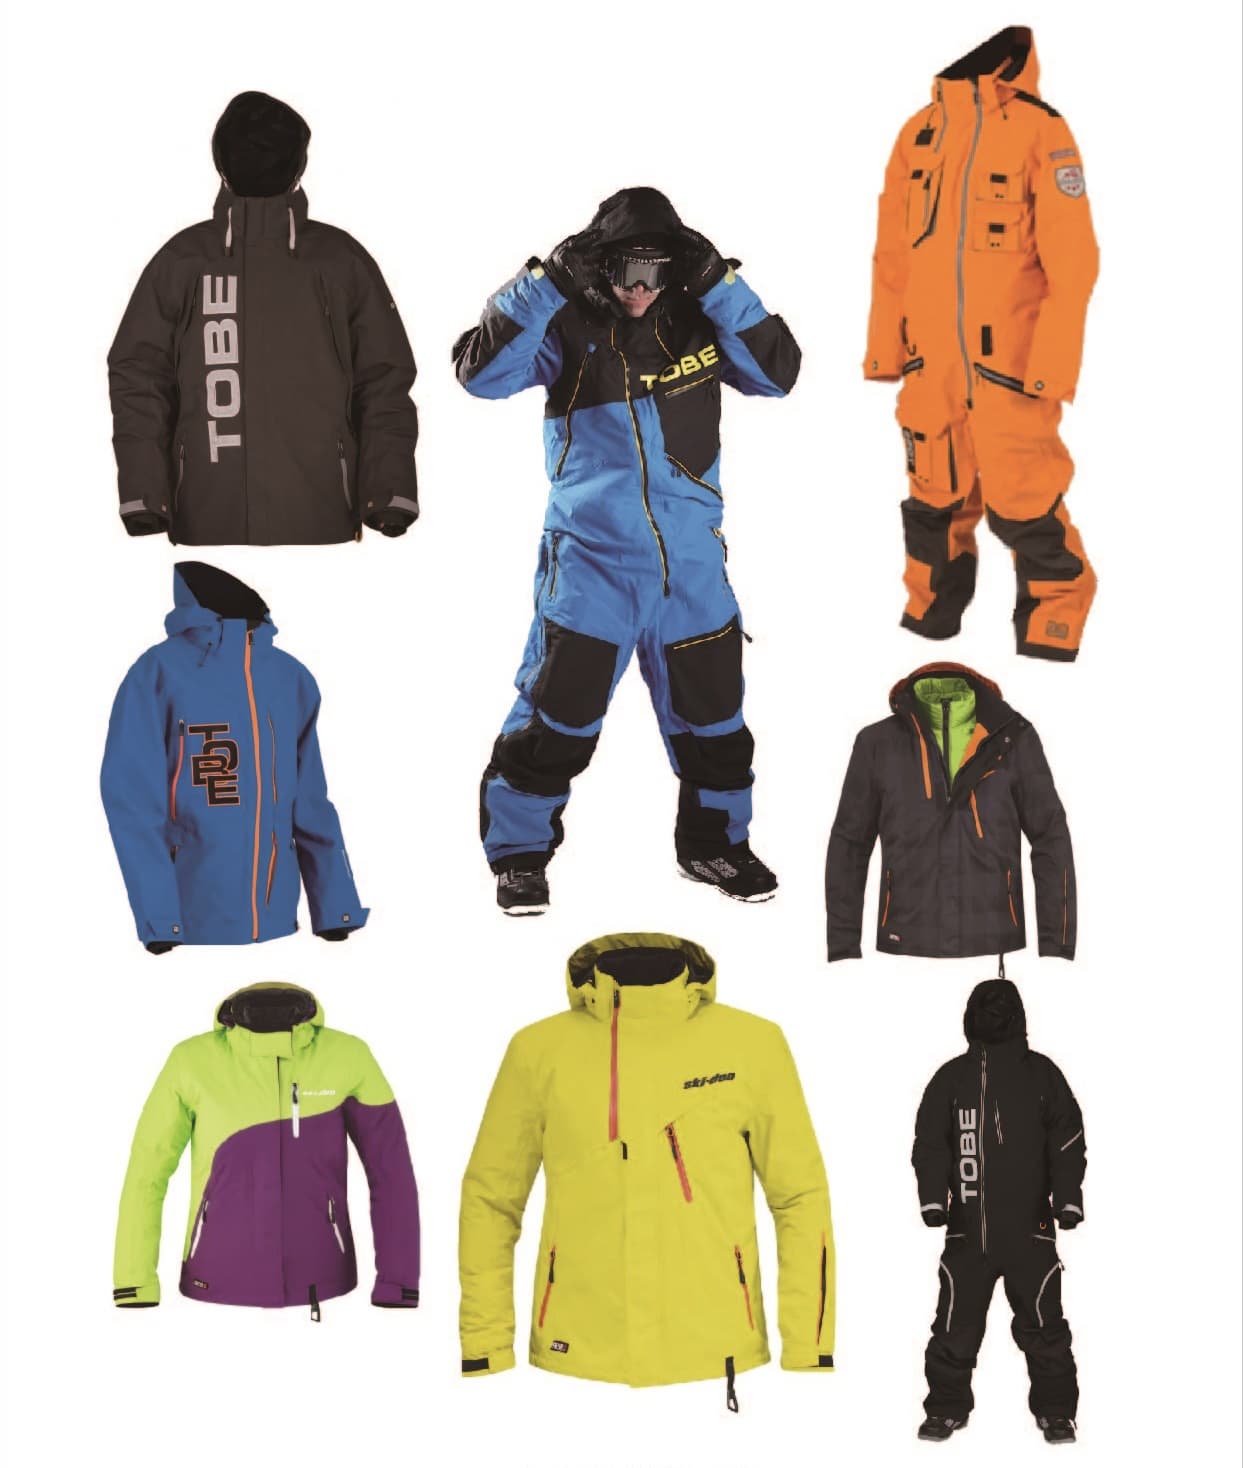 Skiwear_ Outdoor clothing_ Sportswear_ Uniform